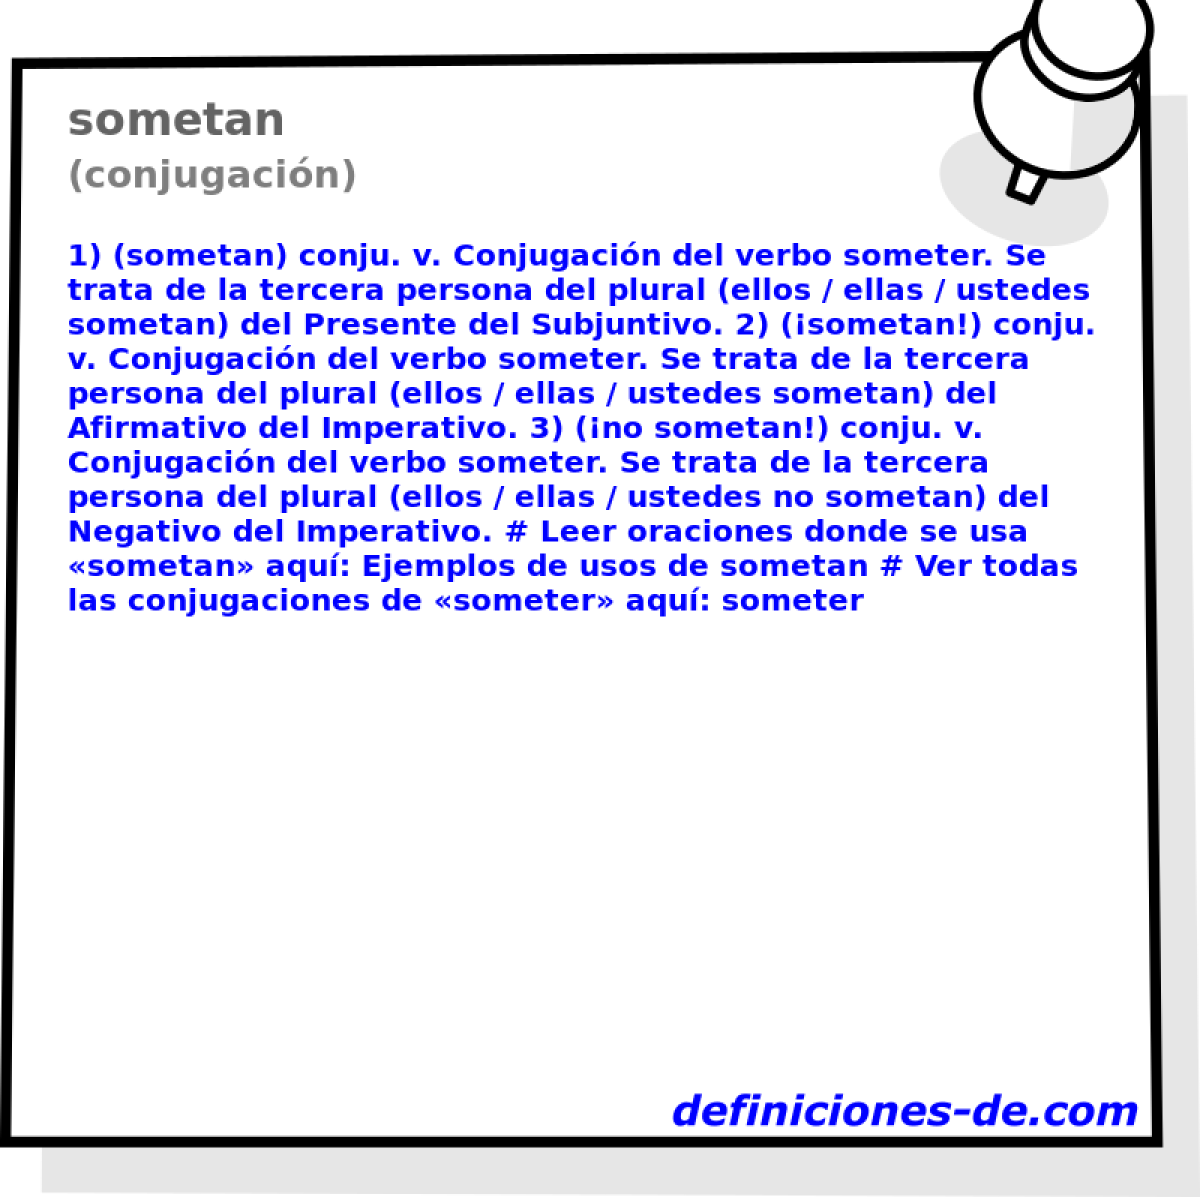 sometan (conjugacin)